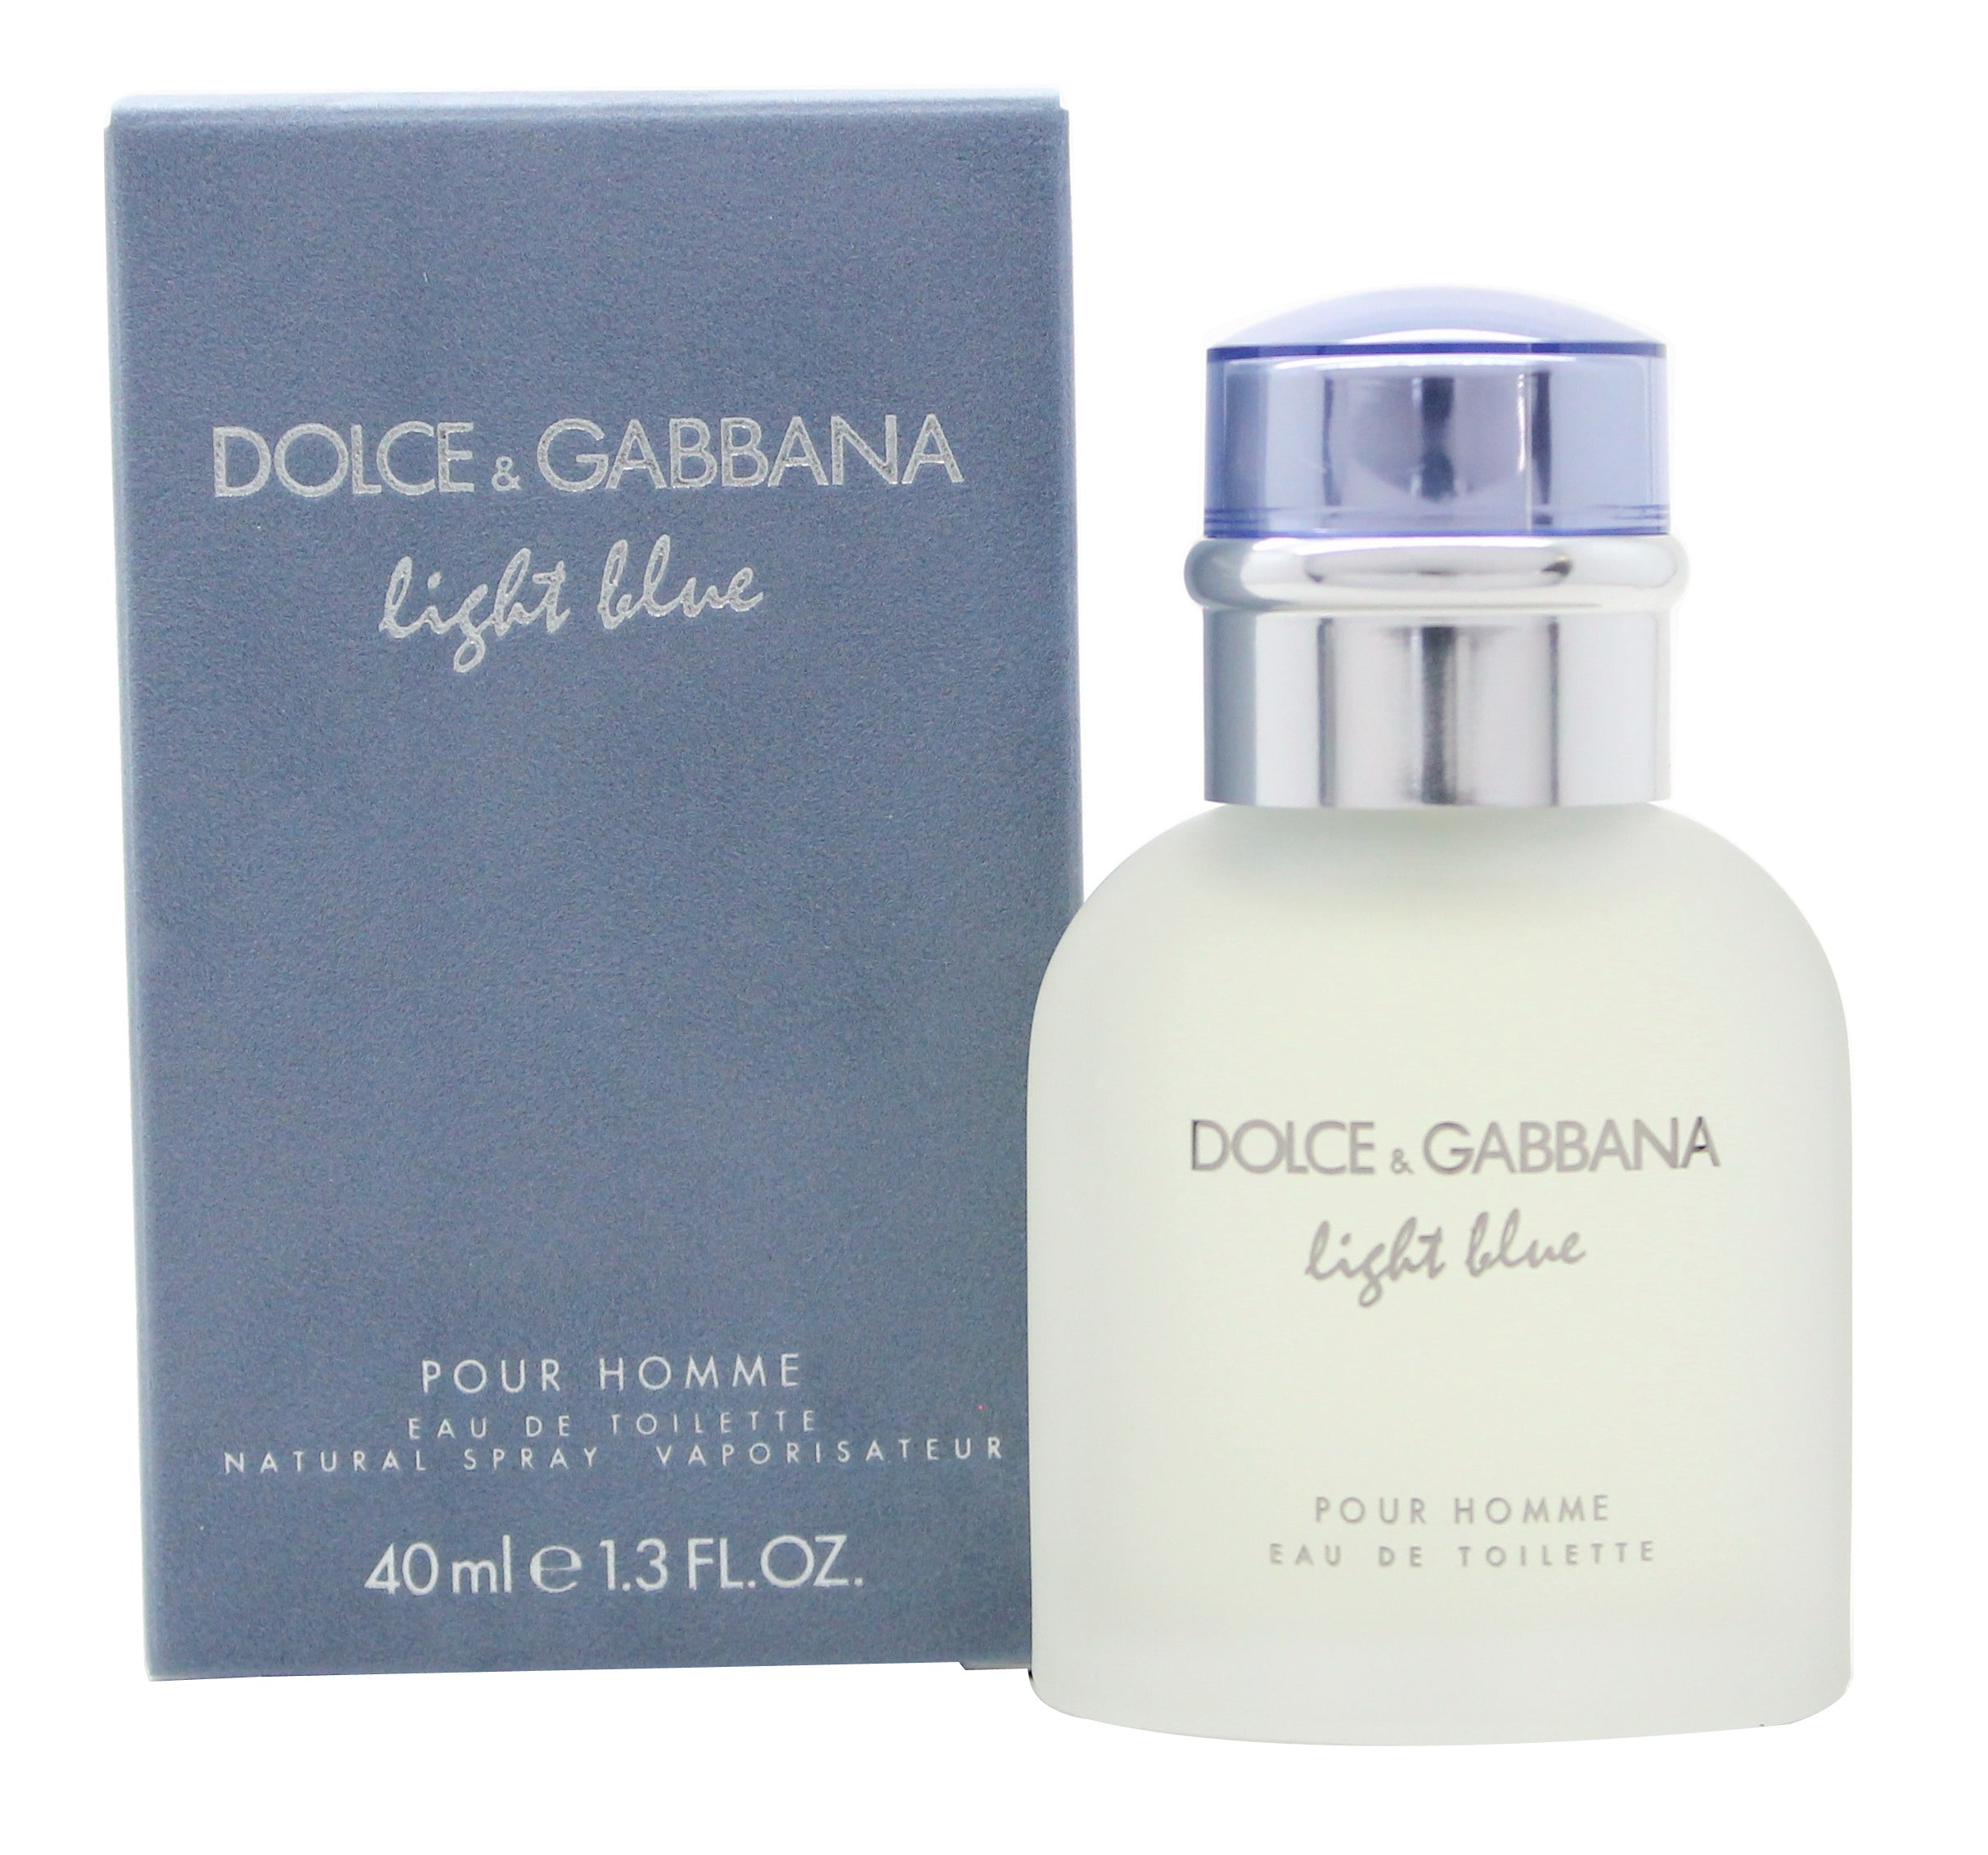 View Dolce Gabbana Light Blue Eau de Toilette 40ml Spray information